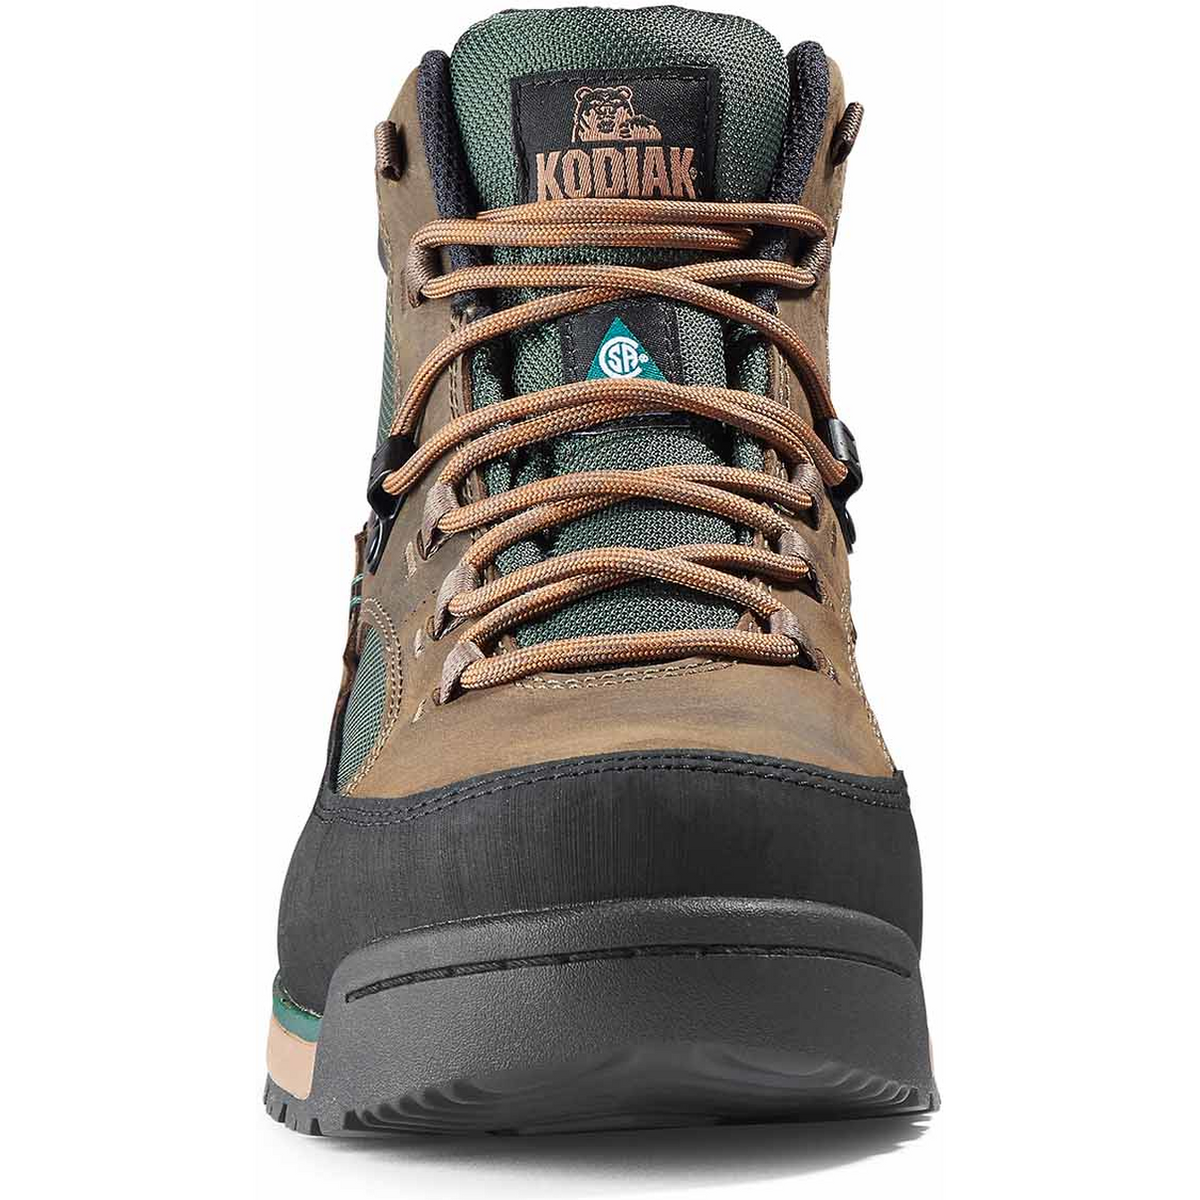 Kodiak Men's Greb Classic Steel Toe WP Hiker Safety Work Boot - Fossil